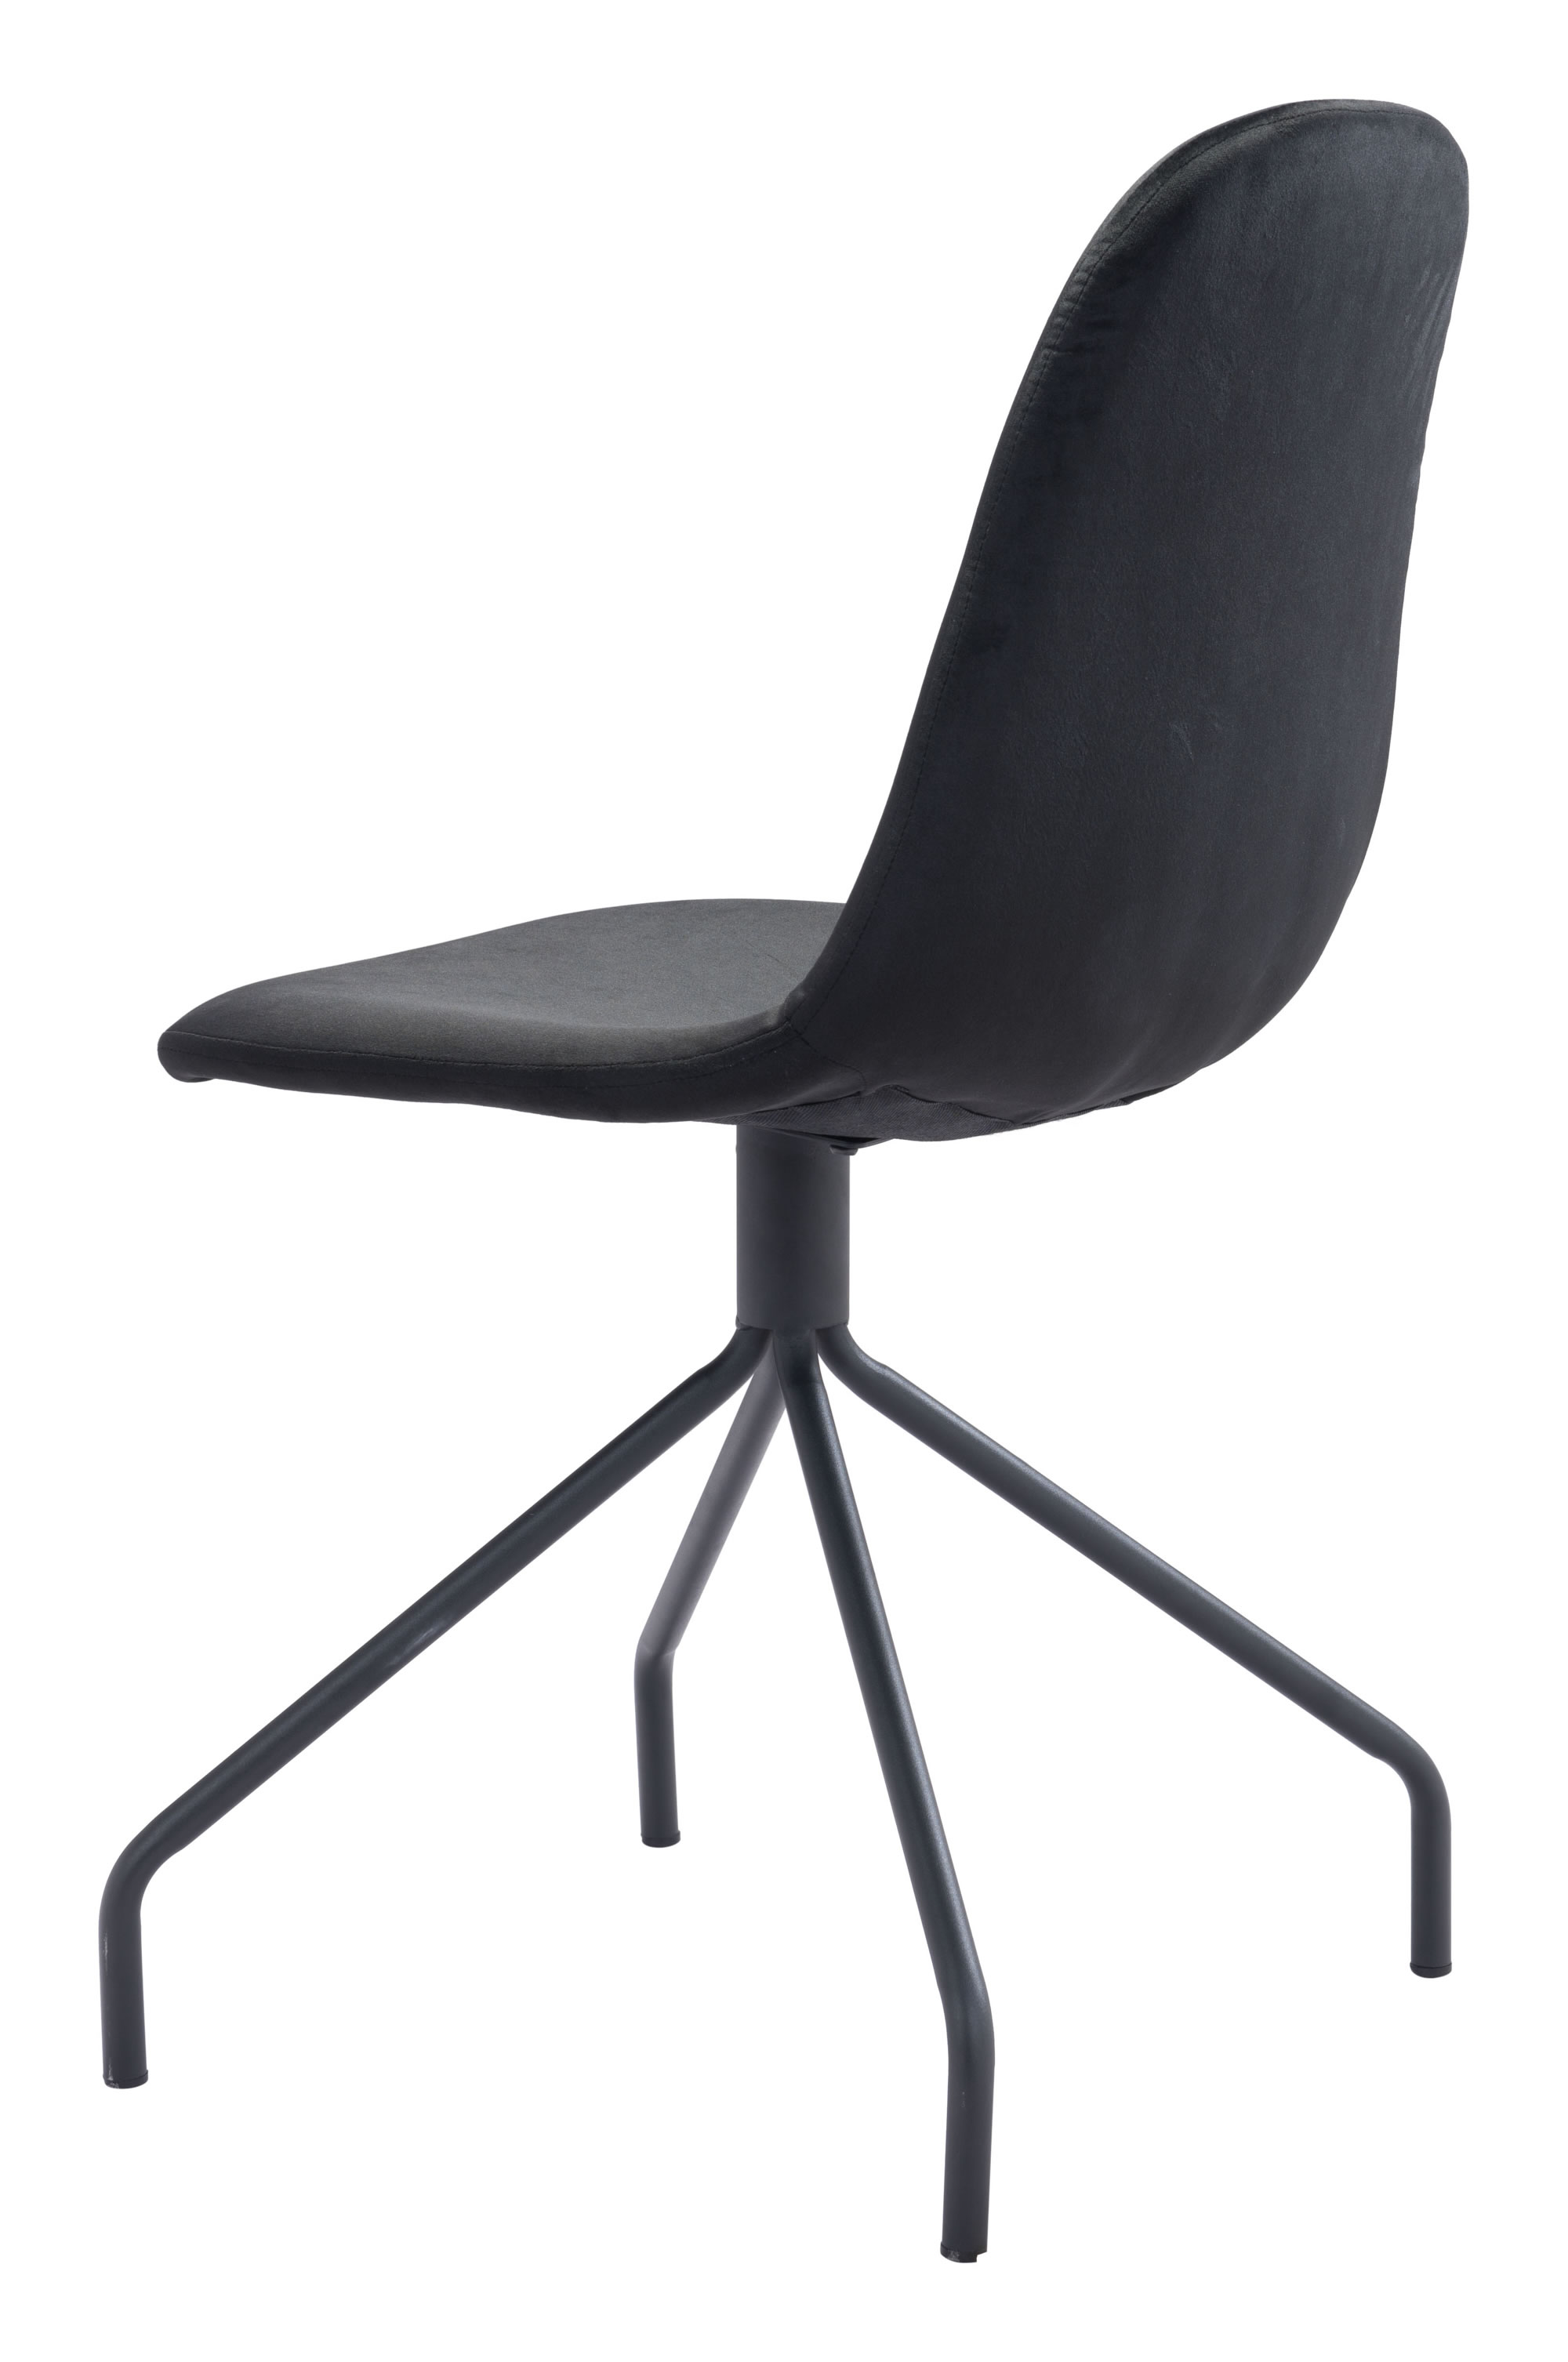 17.7" x 20.9" x 33.9" Black, Velvet, Steel & Plywood, Chair - Set of 2